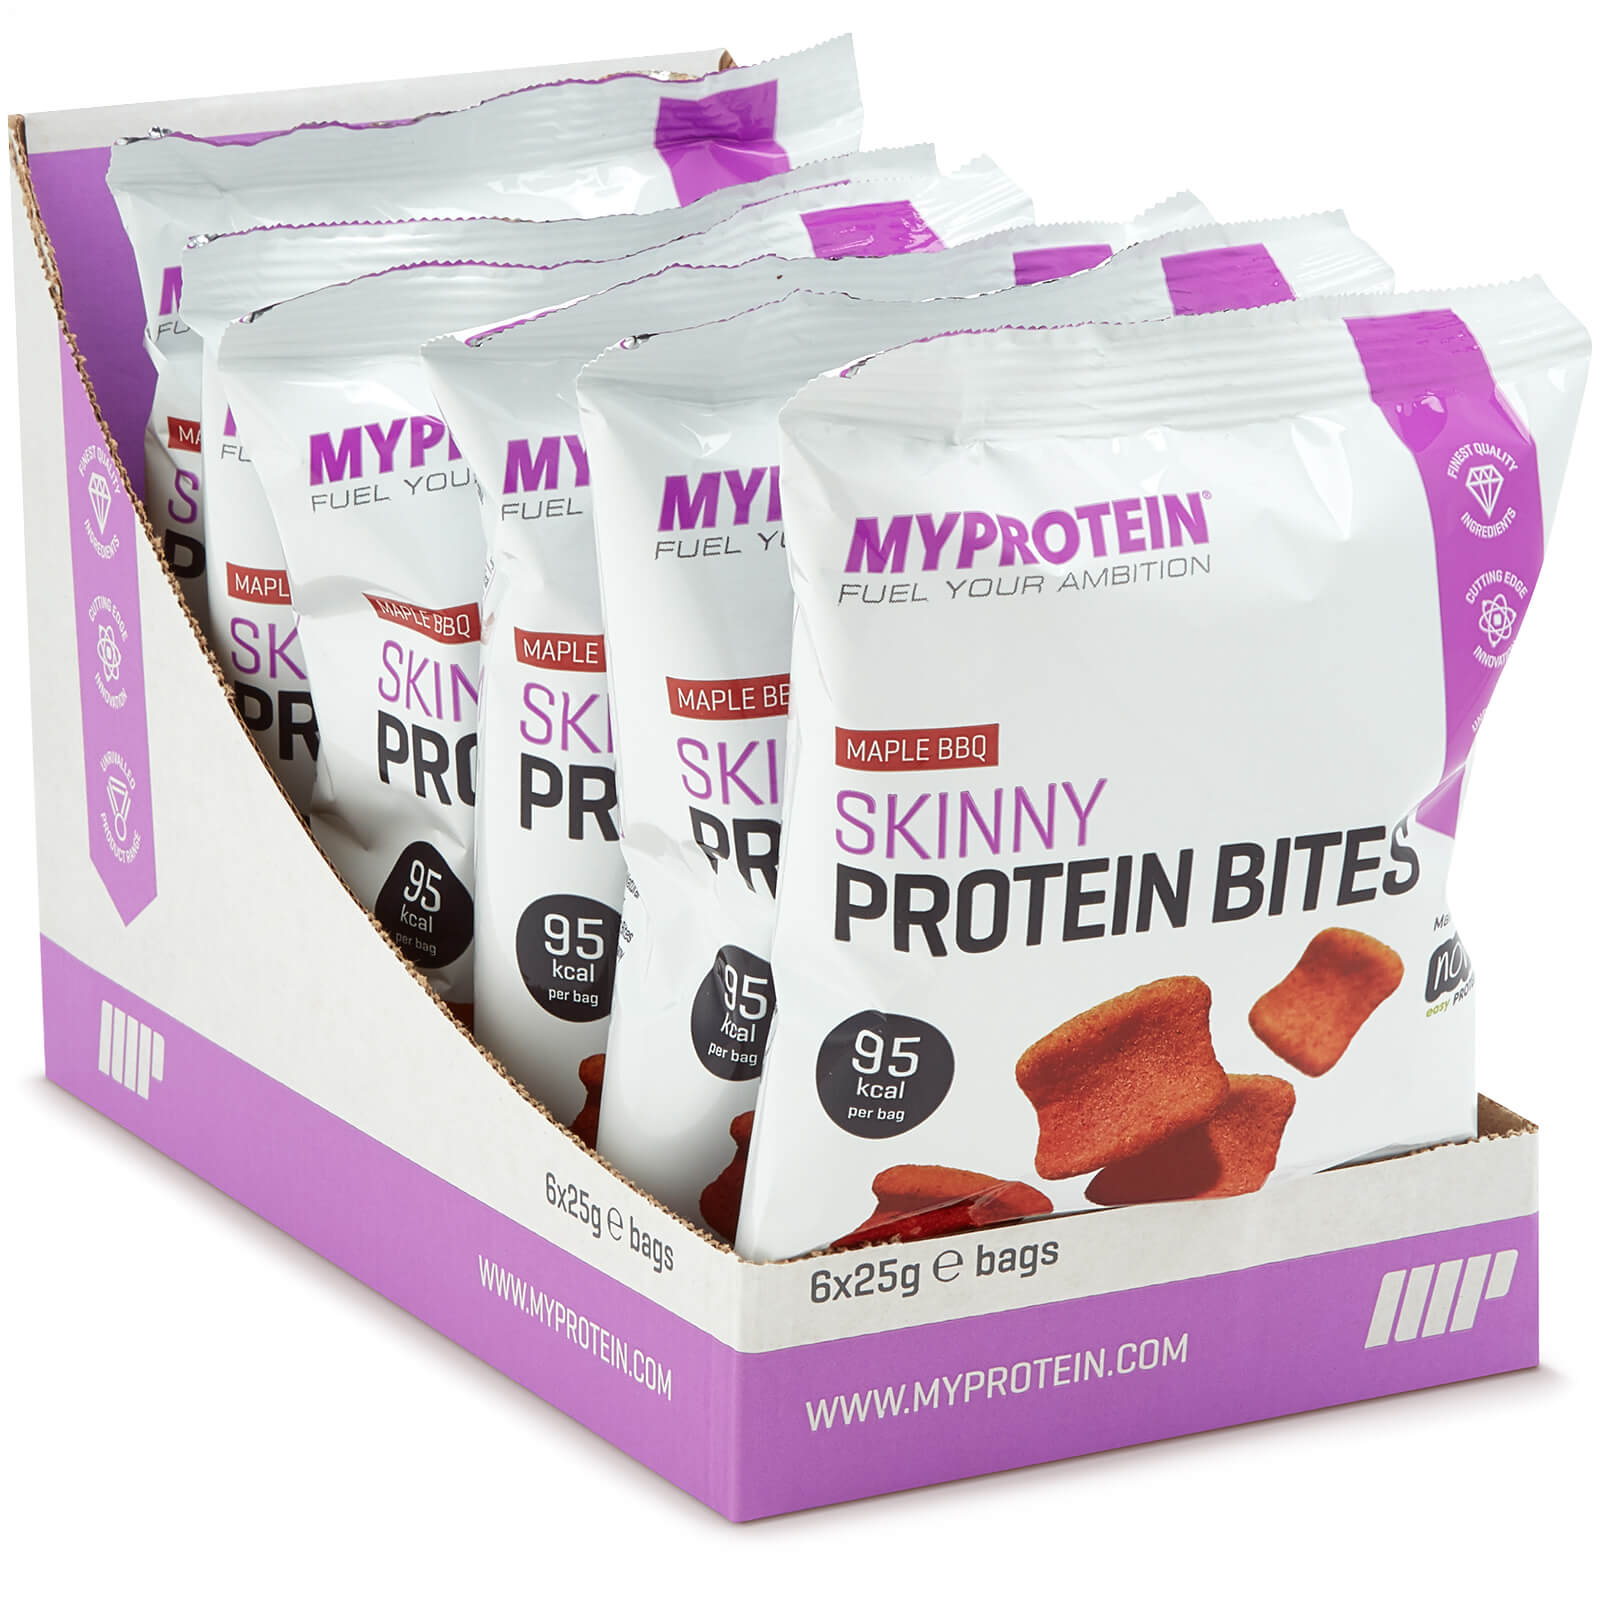 Active Women Skinny Protein Bites